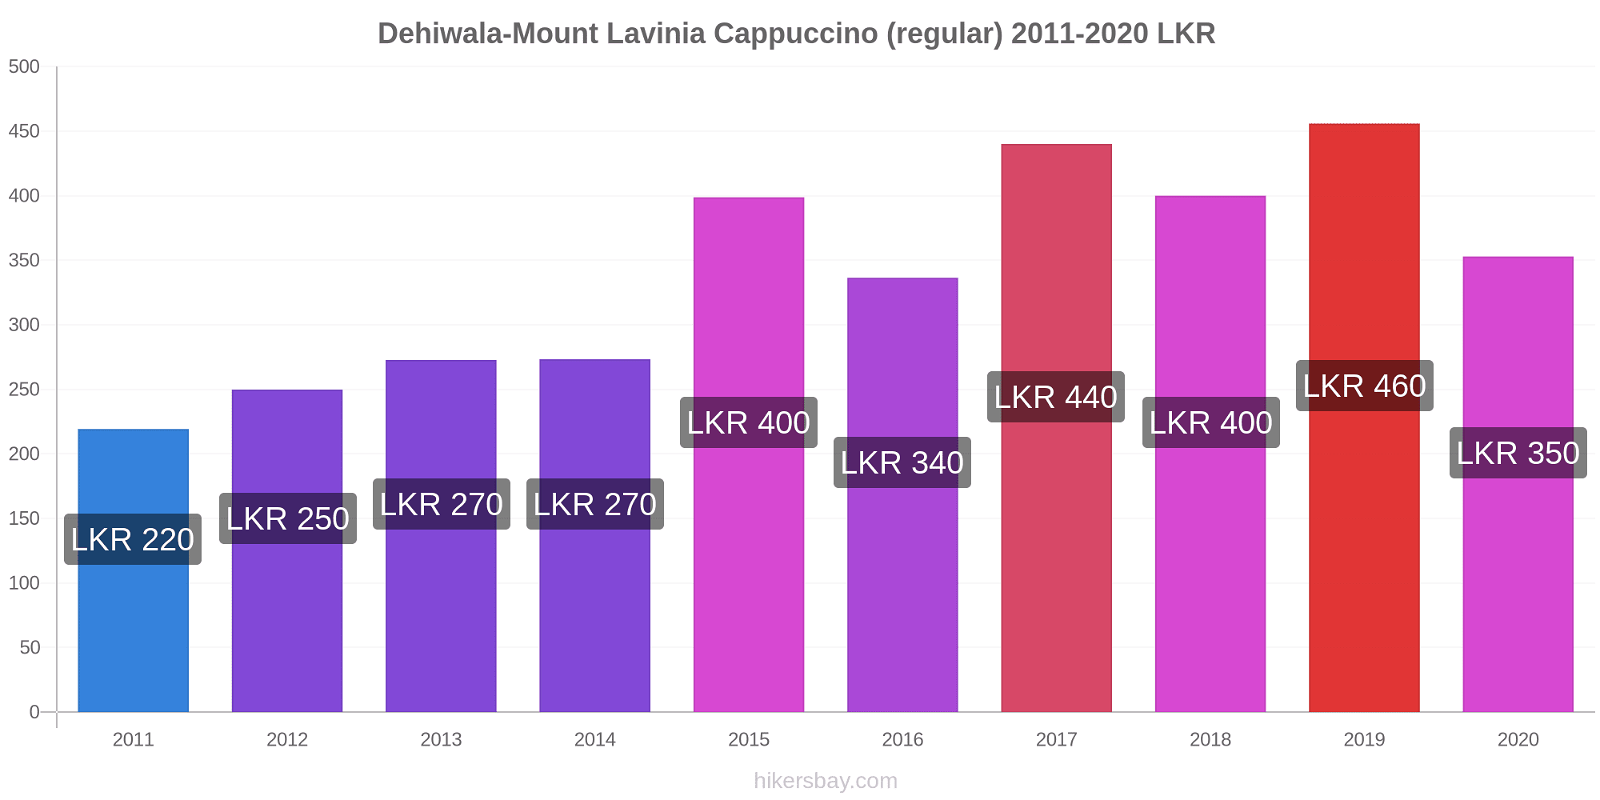 Dehiwala-Mount Lavinia price changes Cappuccino (regular) hikersbay.com